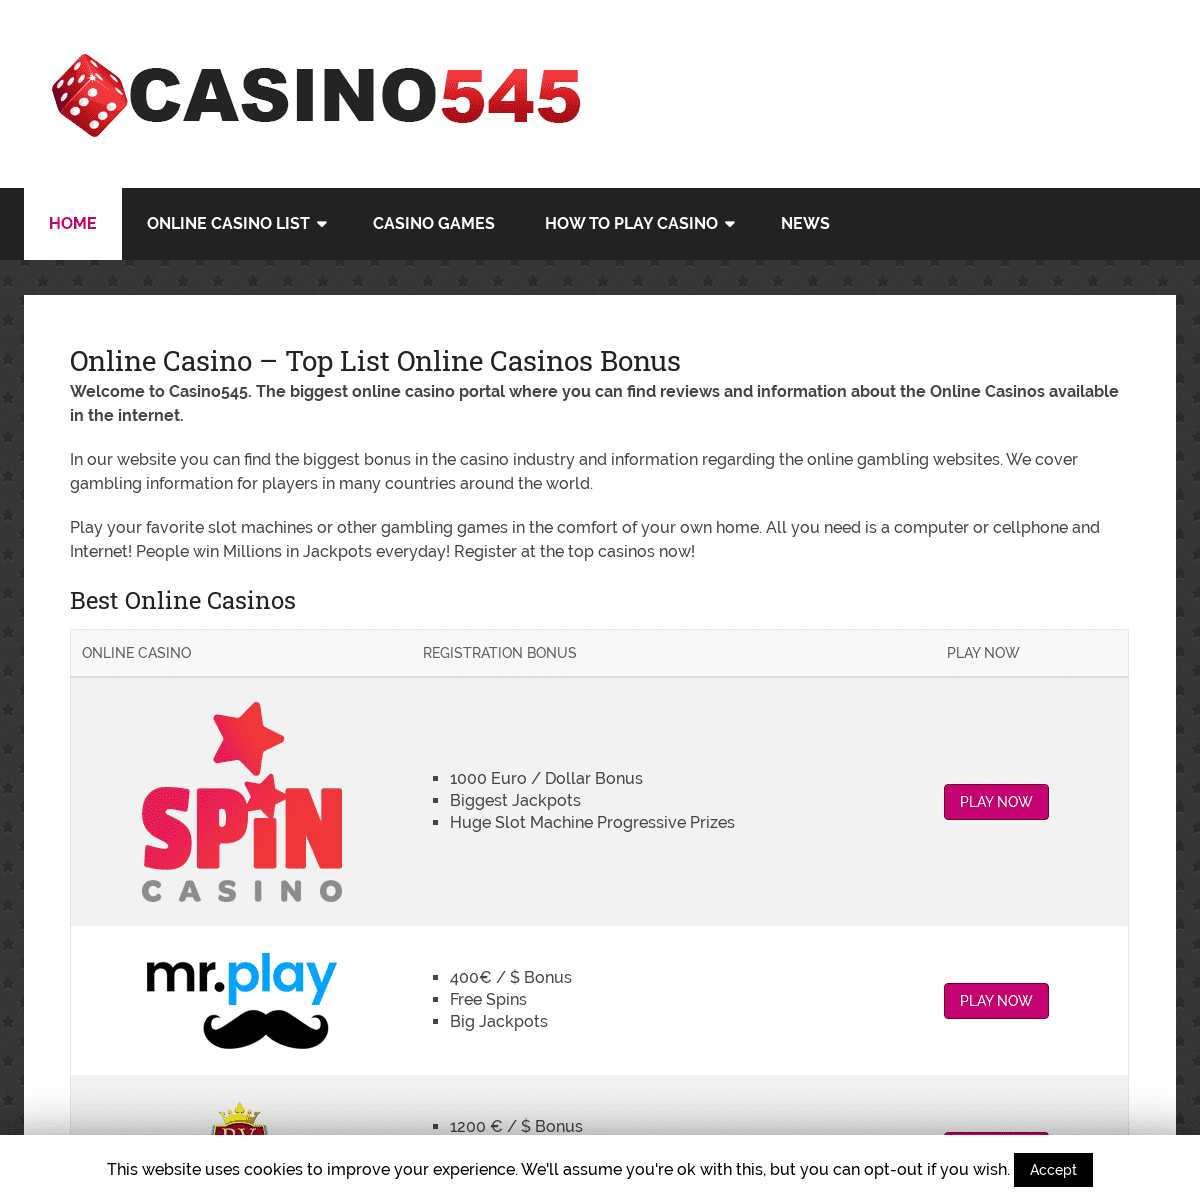 A complete backup of casino545.com